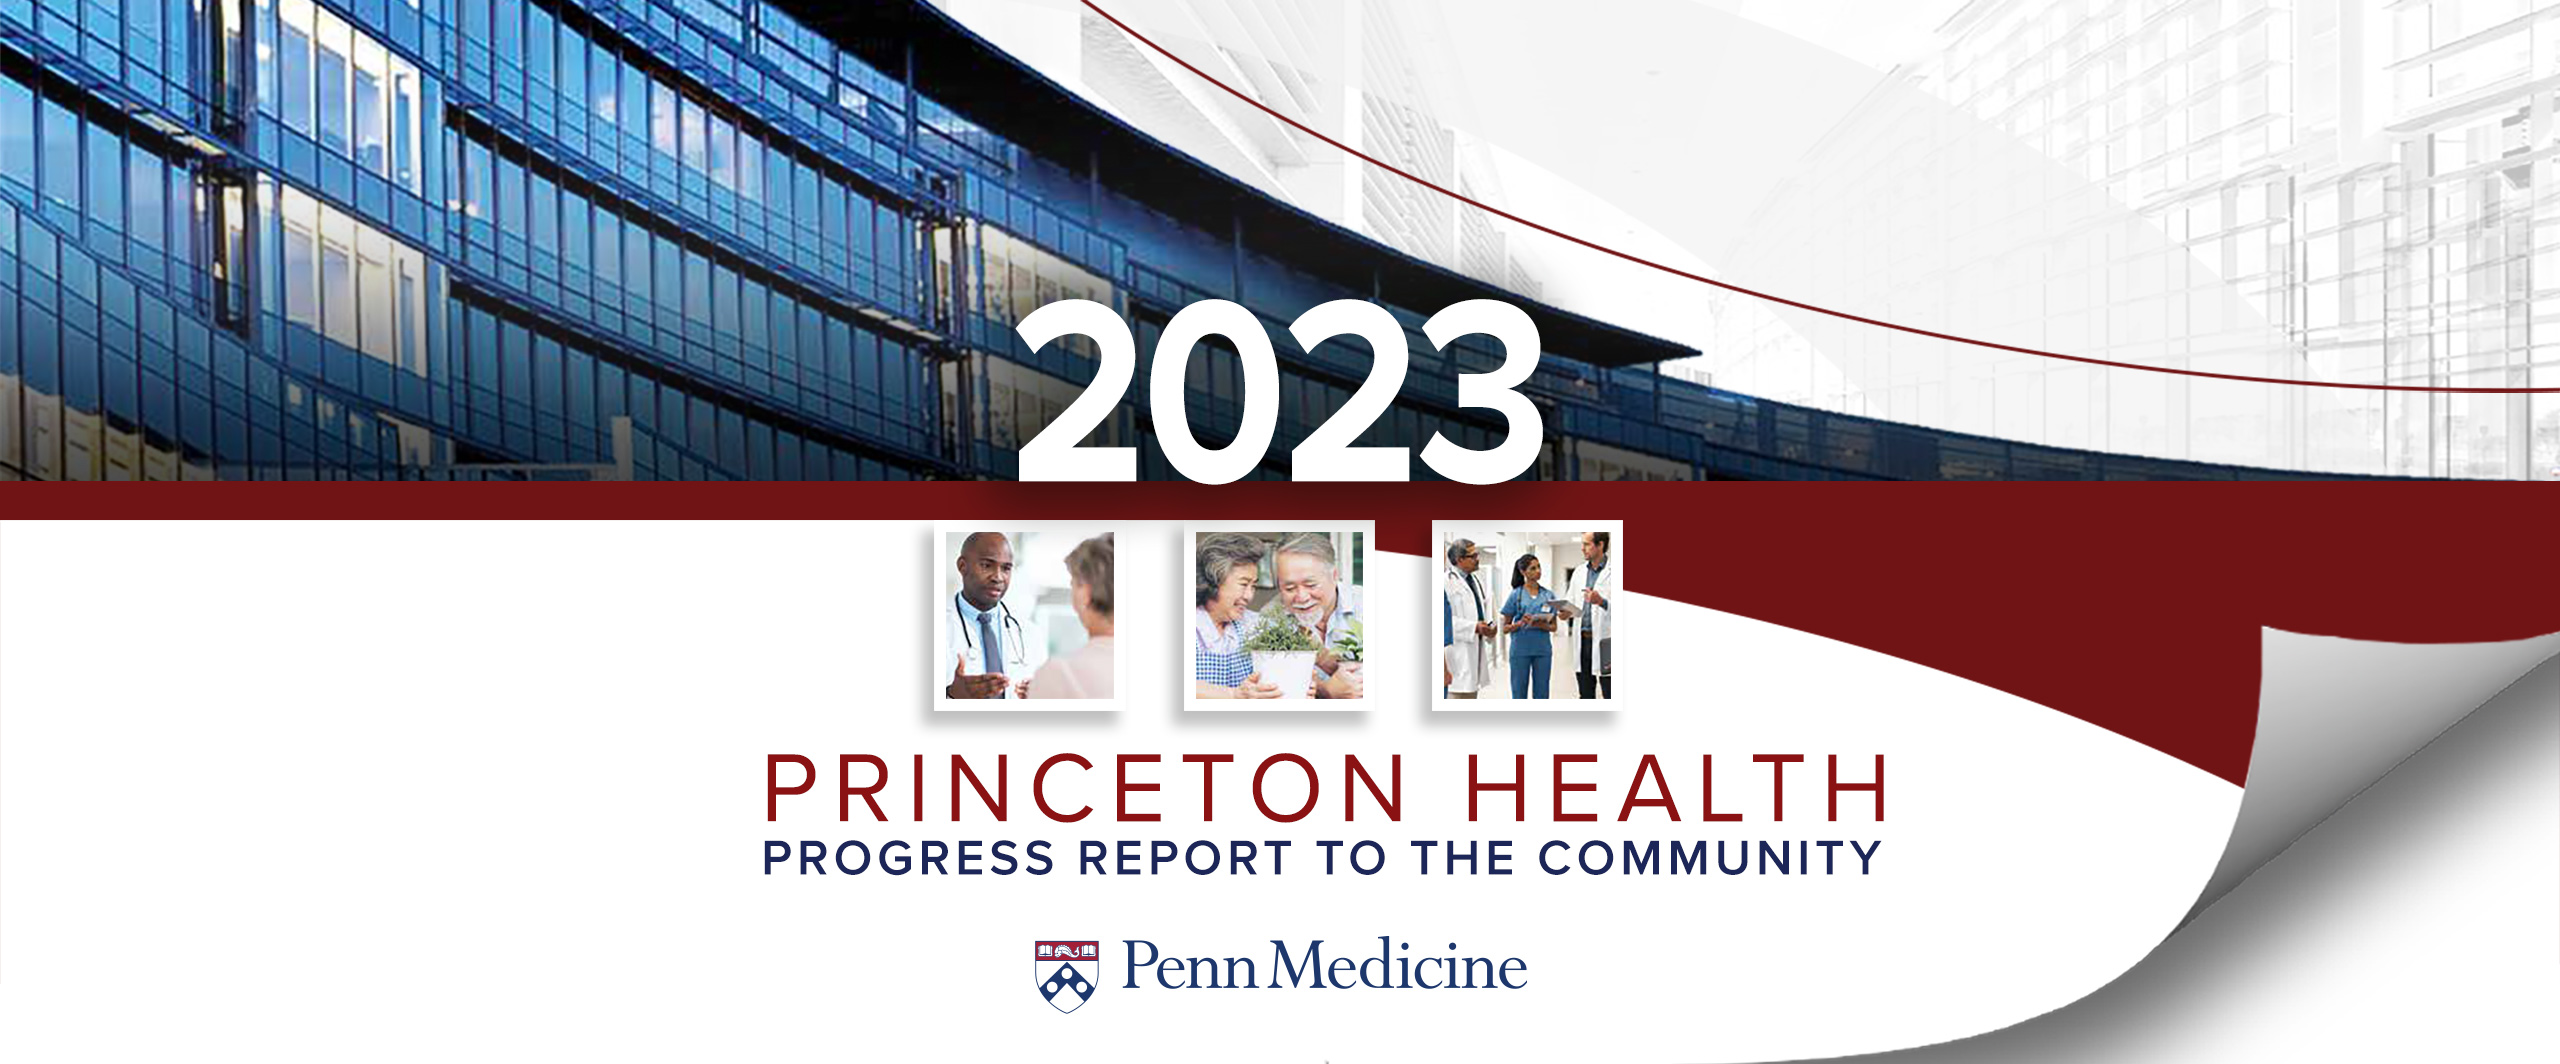 Penn Medicine Princeton Health 2023 Progress Report to the Community